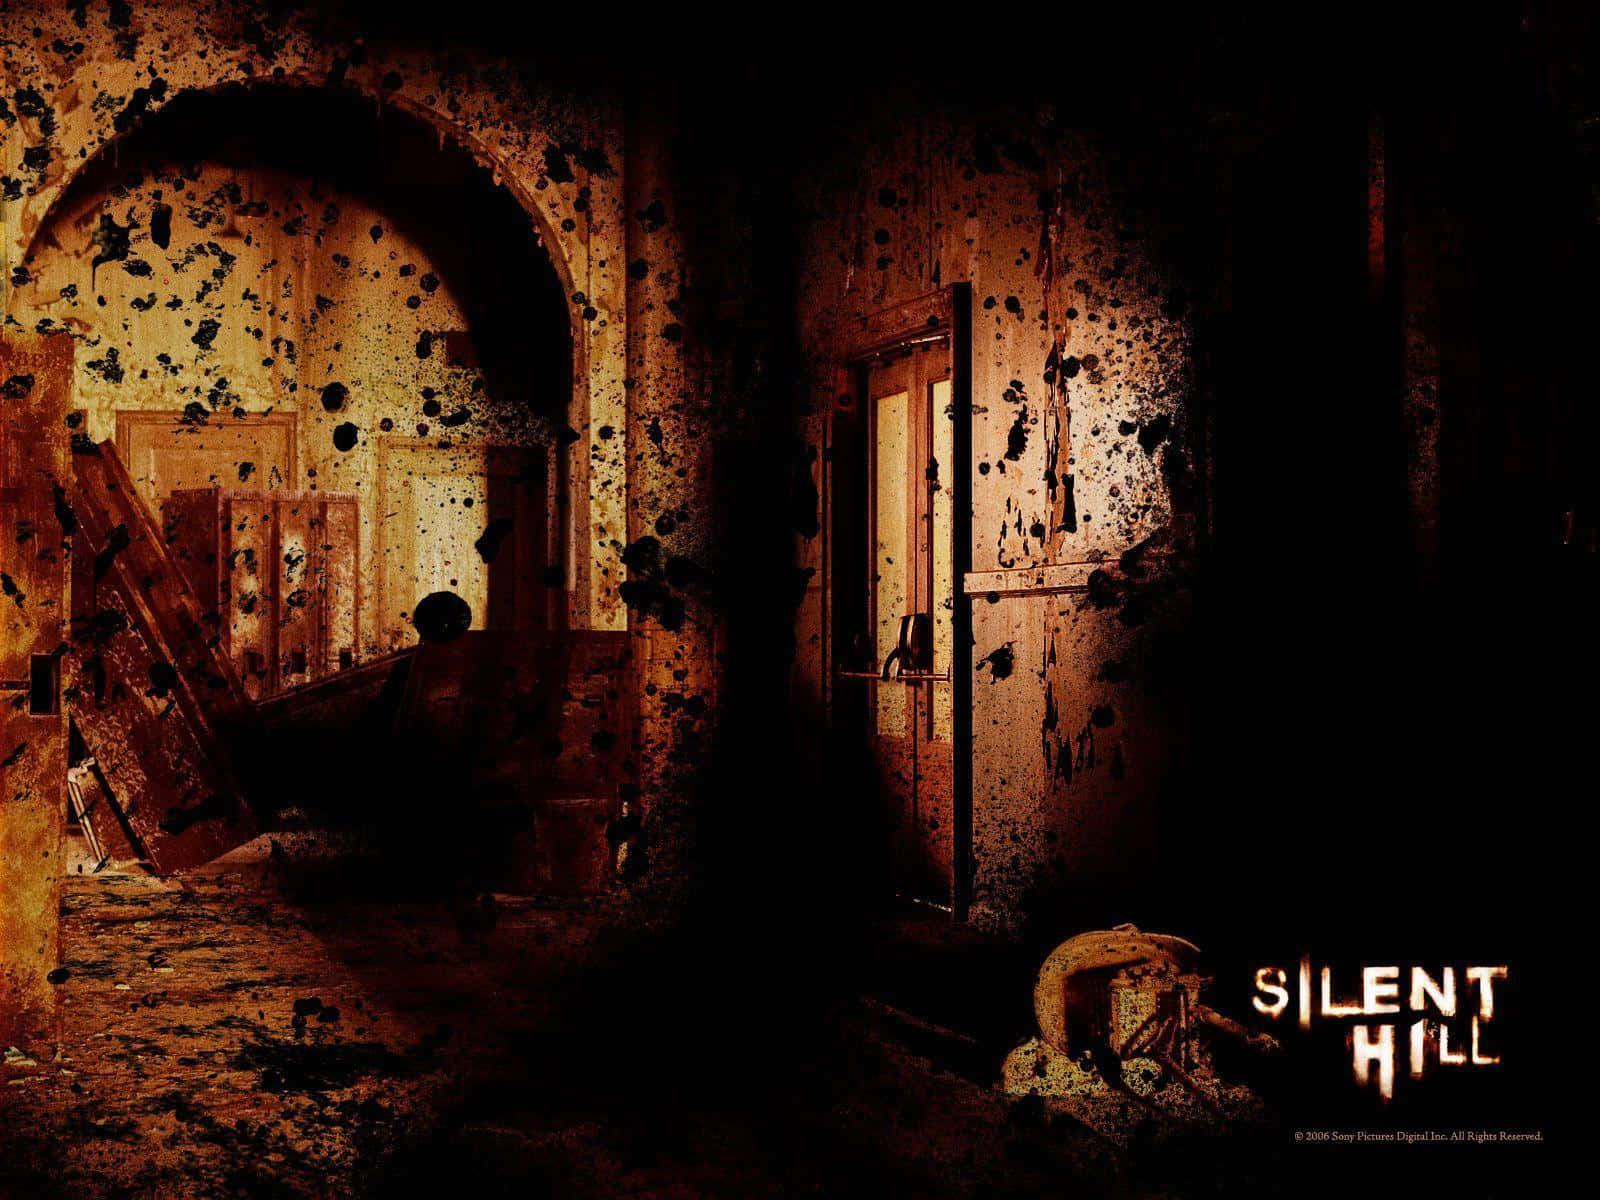 Explore the horrifying Otherworld of Silent Hill